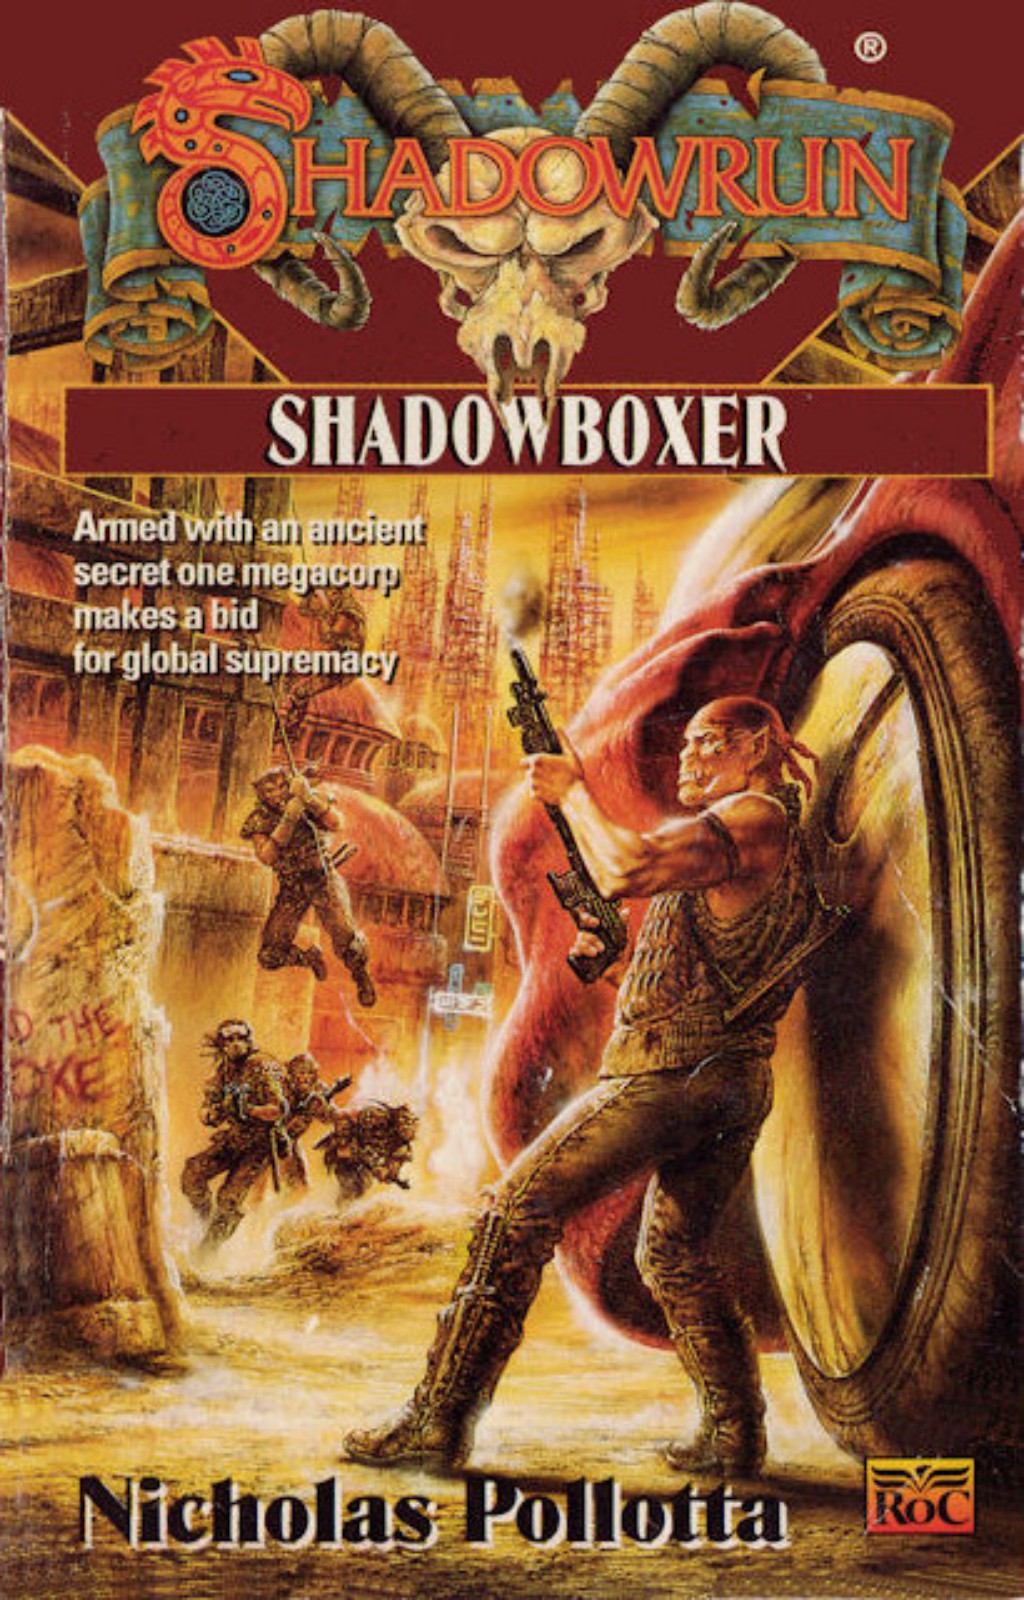 Shadowrun Legends: Shadowboxer